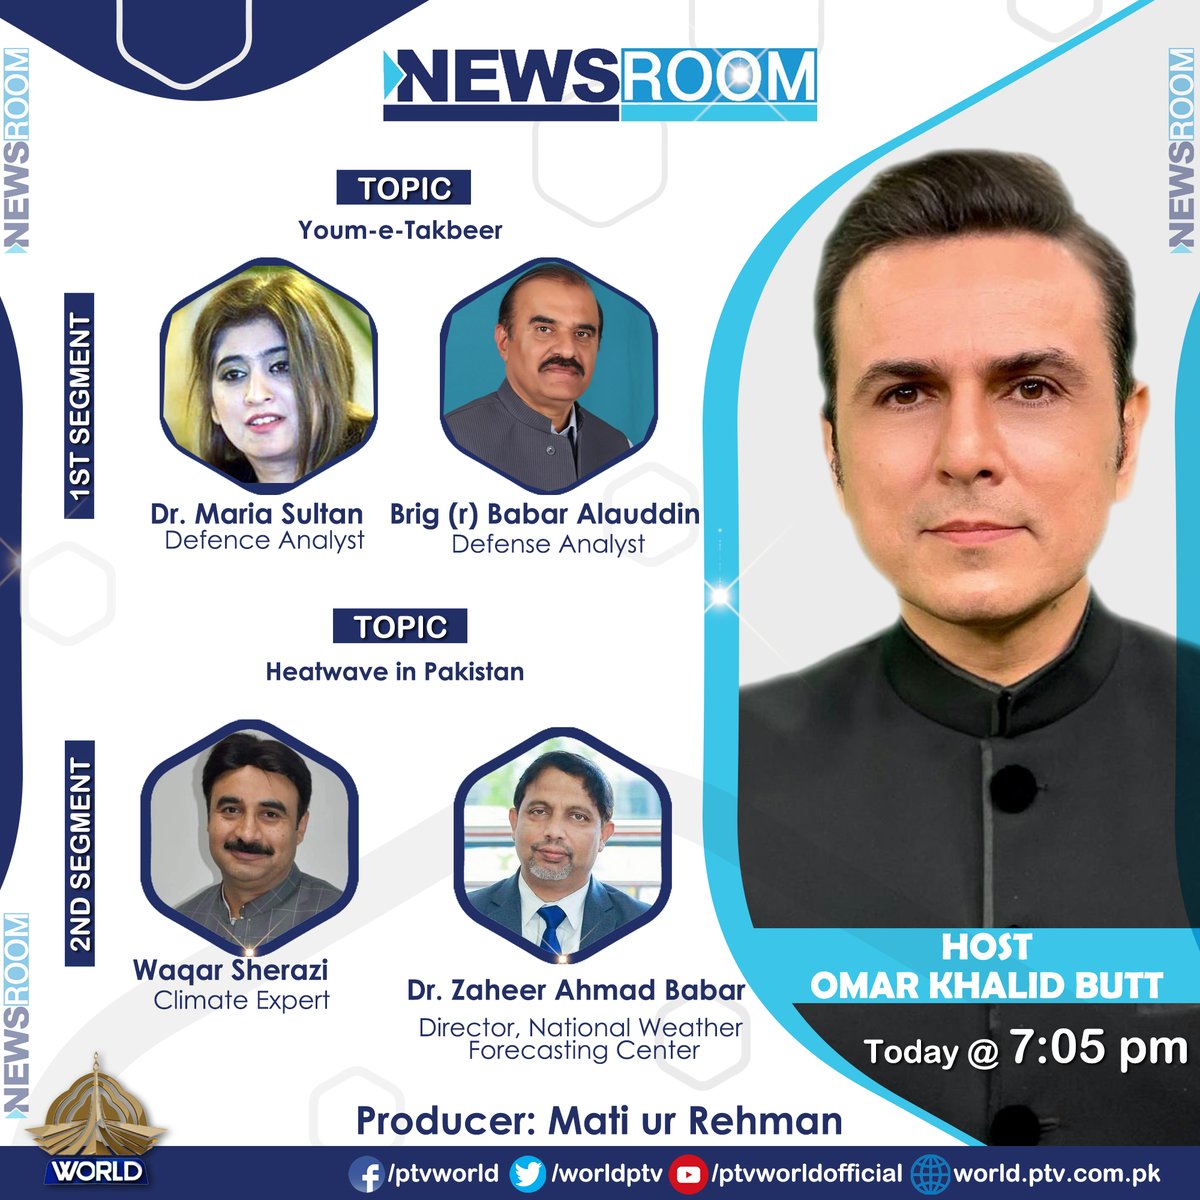 Watch NEWSROOM Tonight at 07:05 pm Only on PTV WORLD @OmarButtPk @MatiurRehman786 @DrMariaSultan1 @babaralaudin